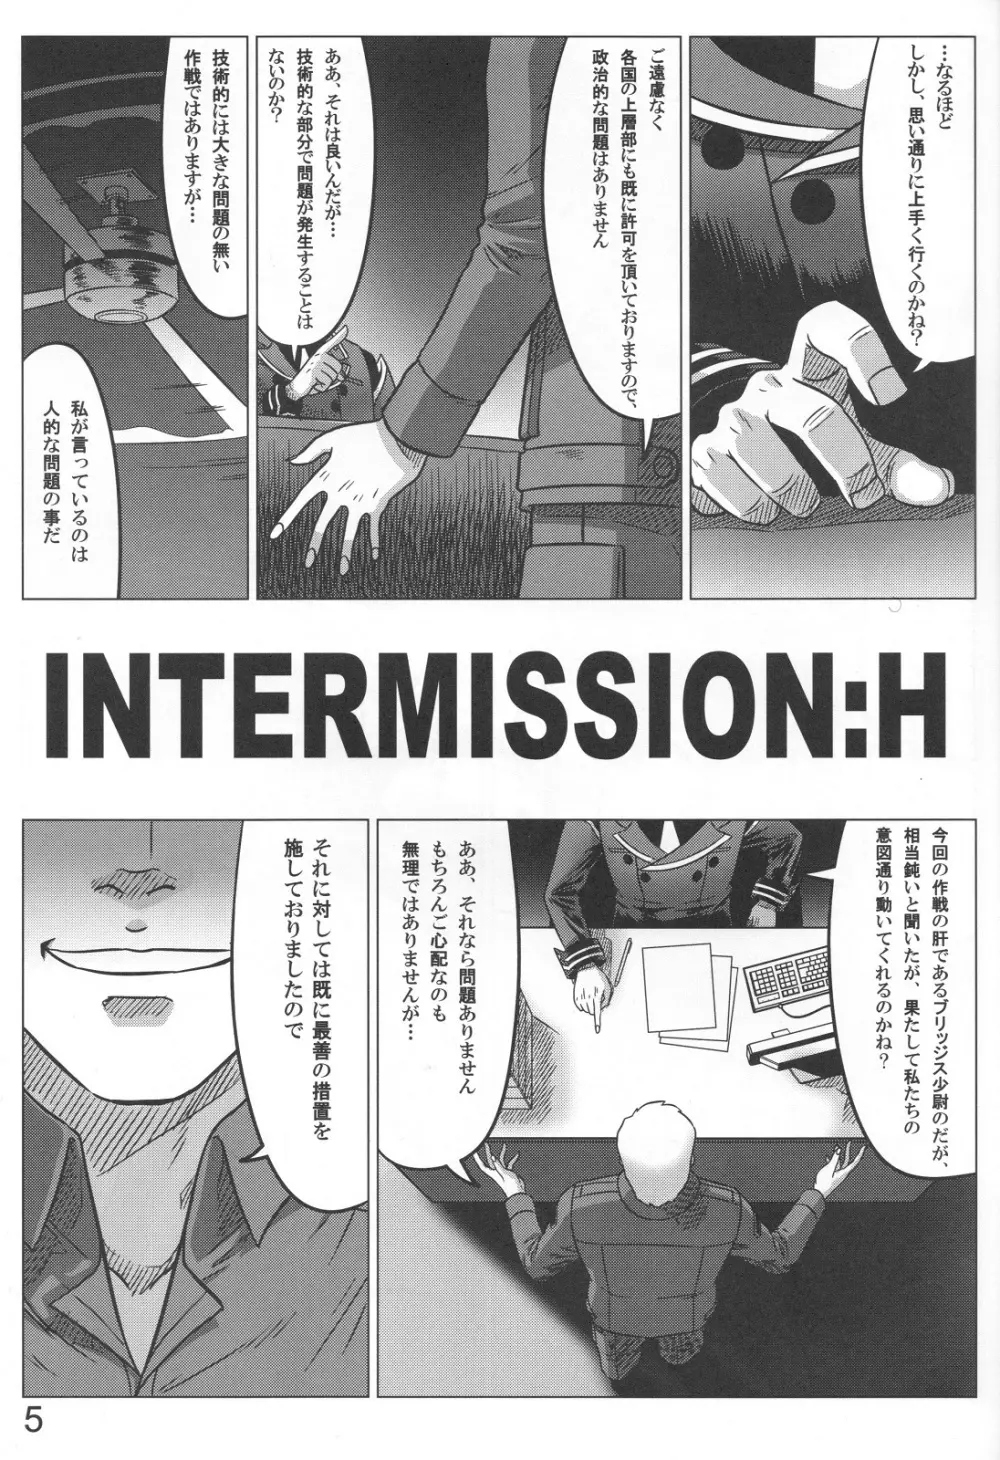 Intermission H - page5